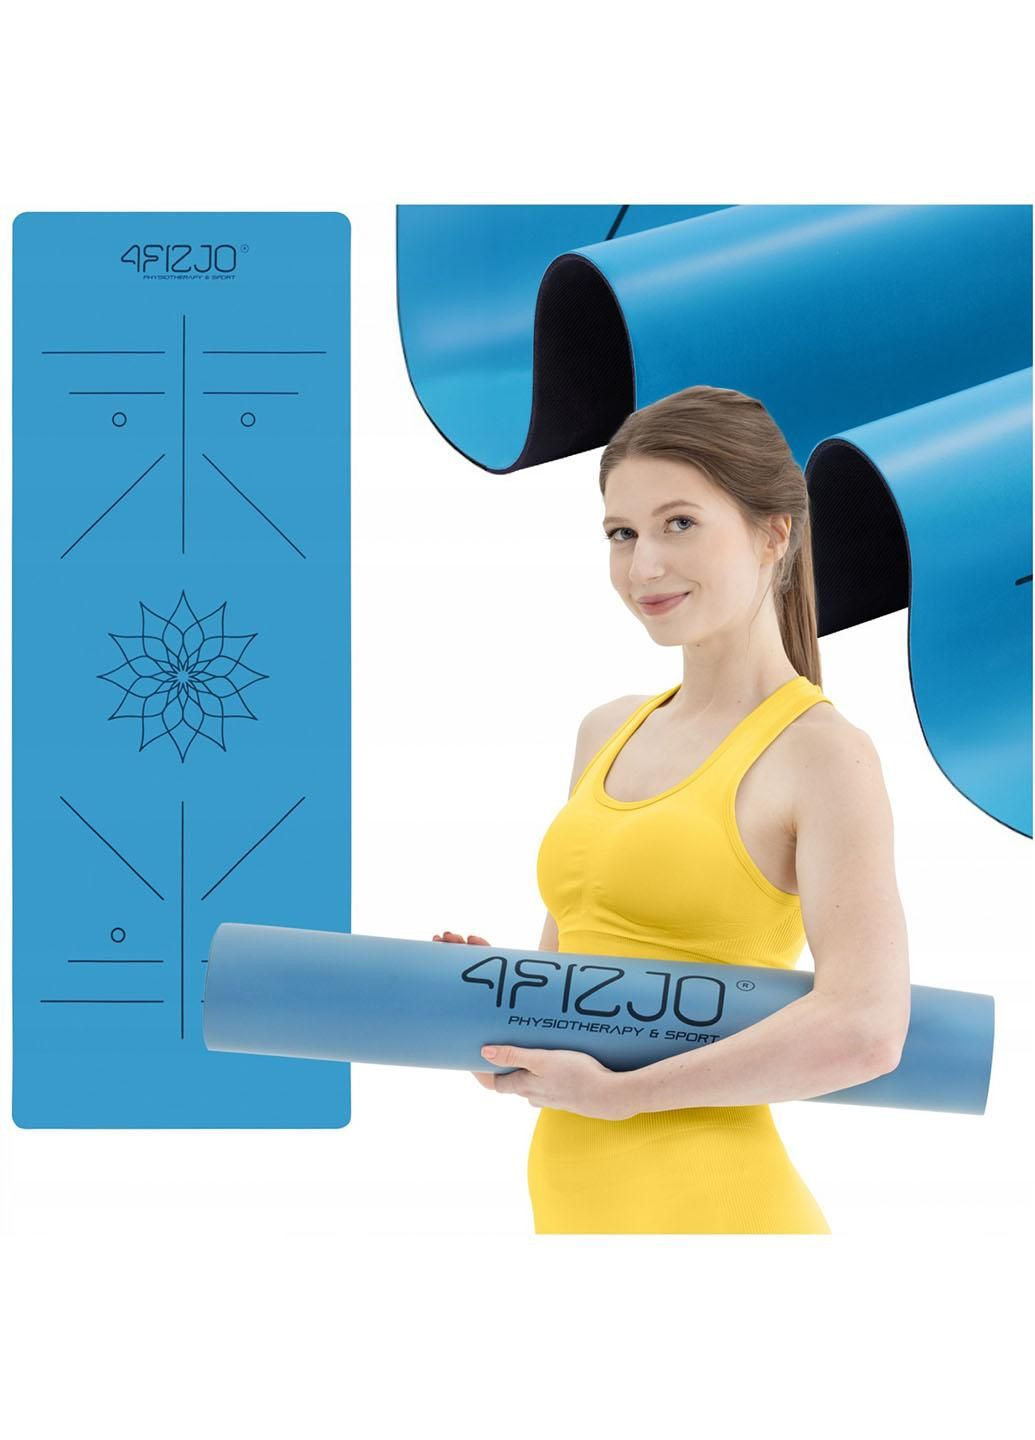 Коврик (мат) спортивный PU 183 x 68 x 0.4 см для йоги и фитнеса 4FJ0588 Blue 4FIZJO (280822895)